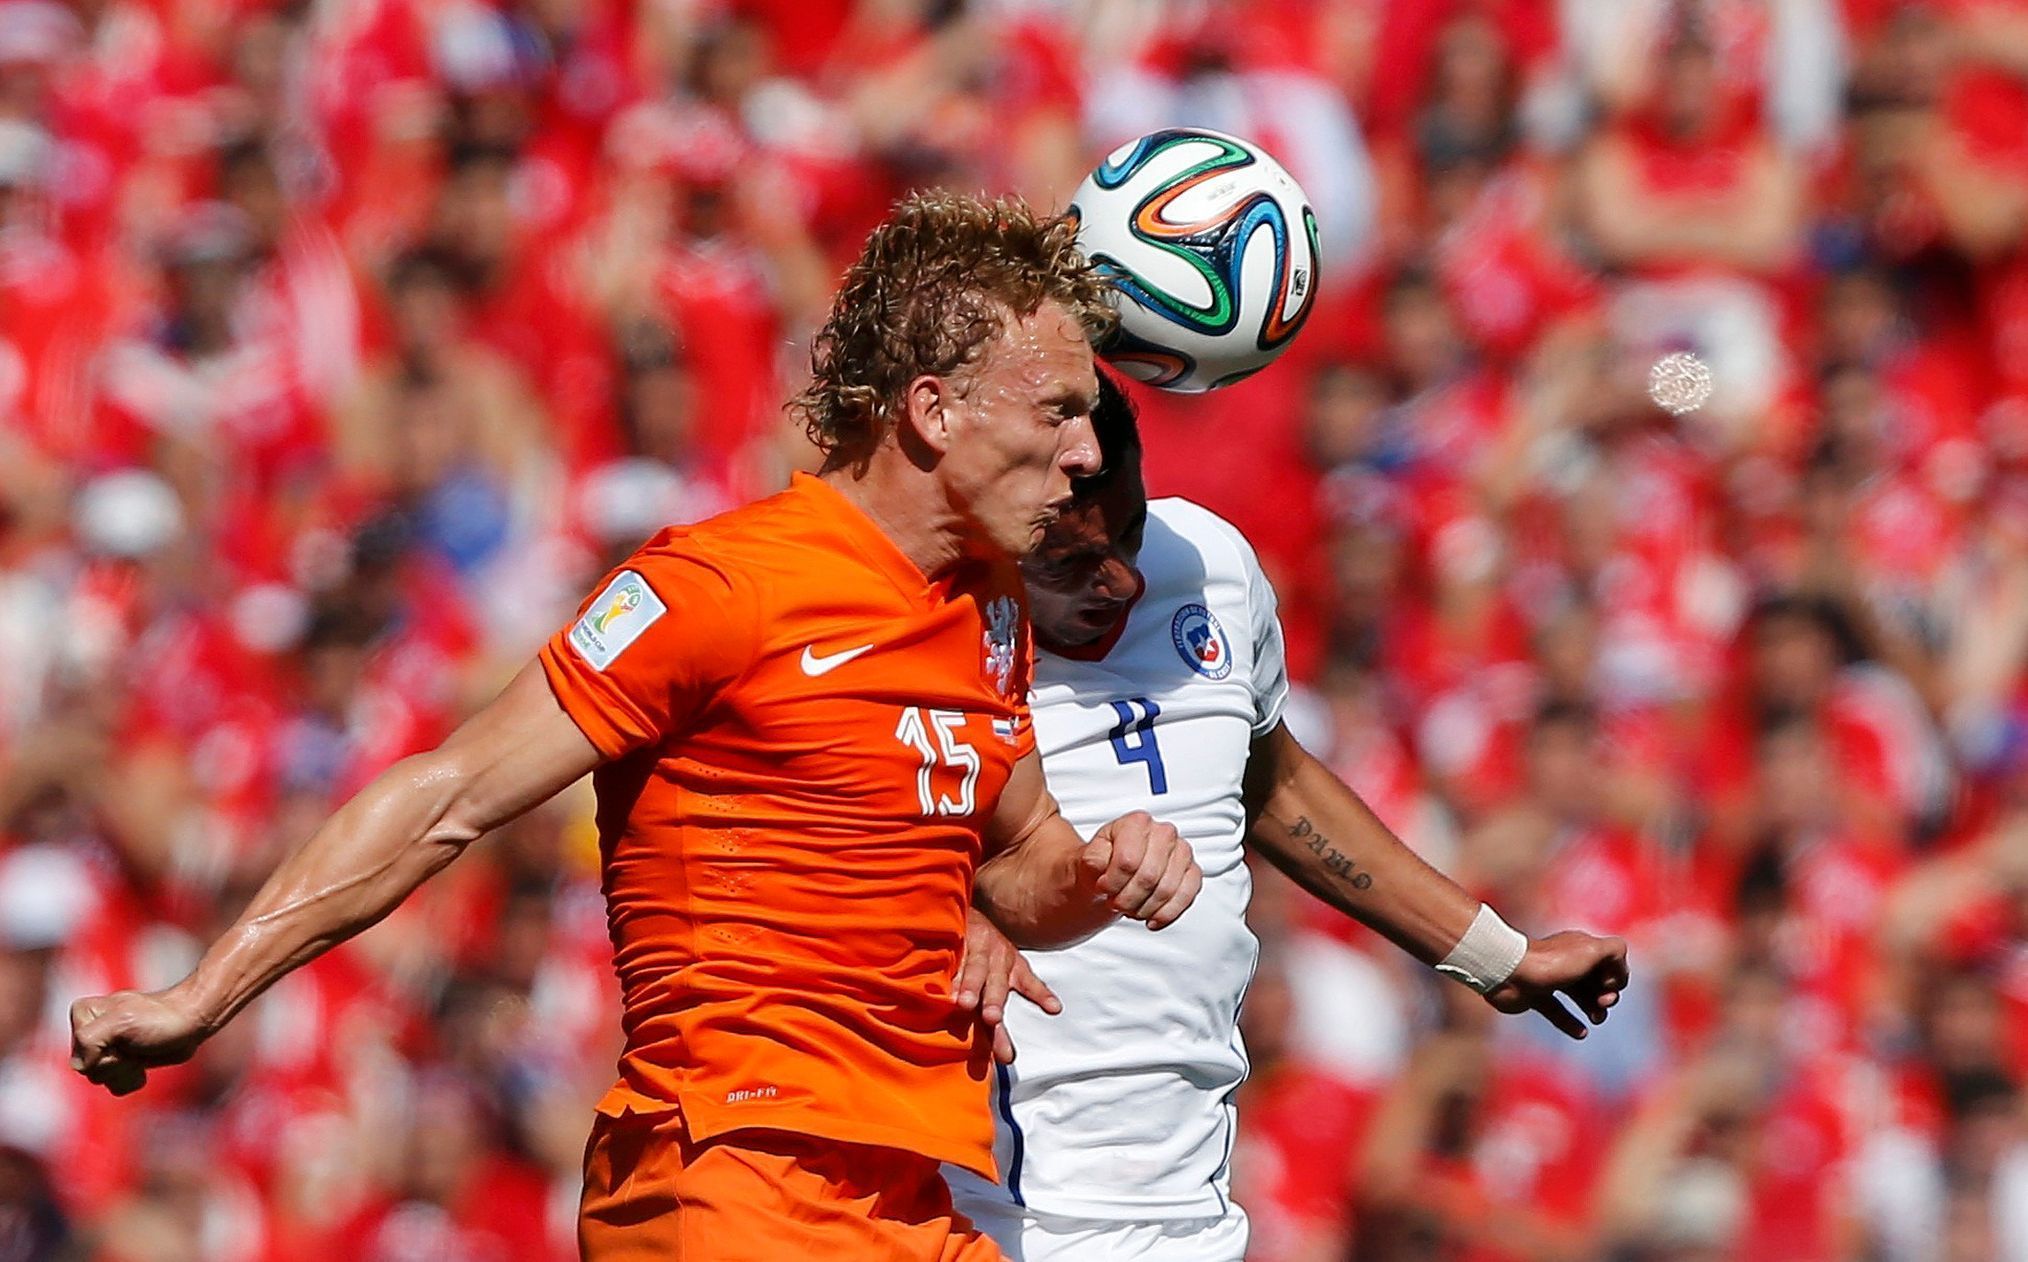 MS 2014, Nizozemsko-Chile: Dirk Kuijt - Mauricio Isla